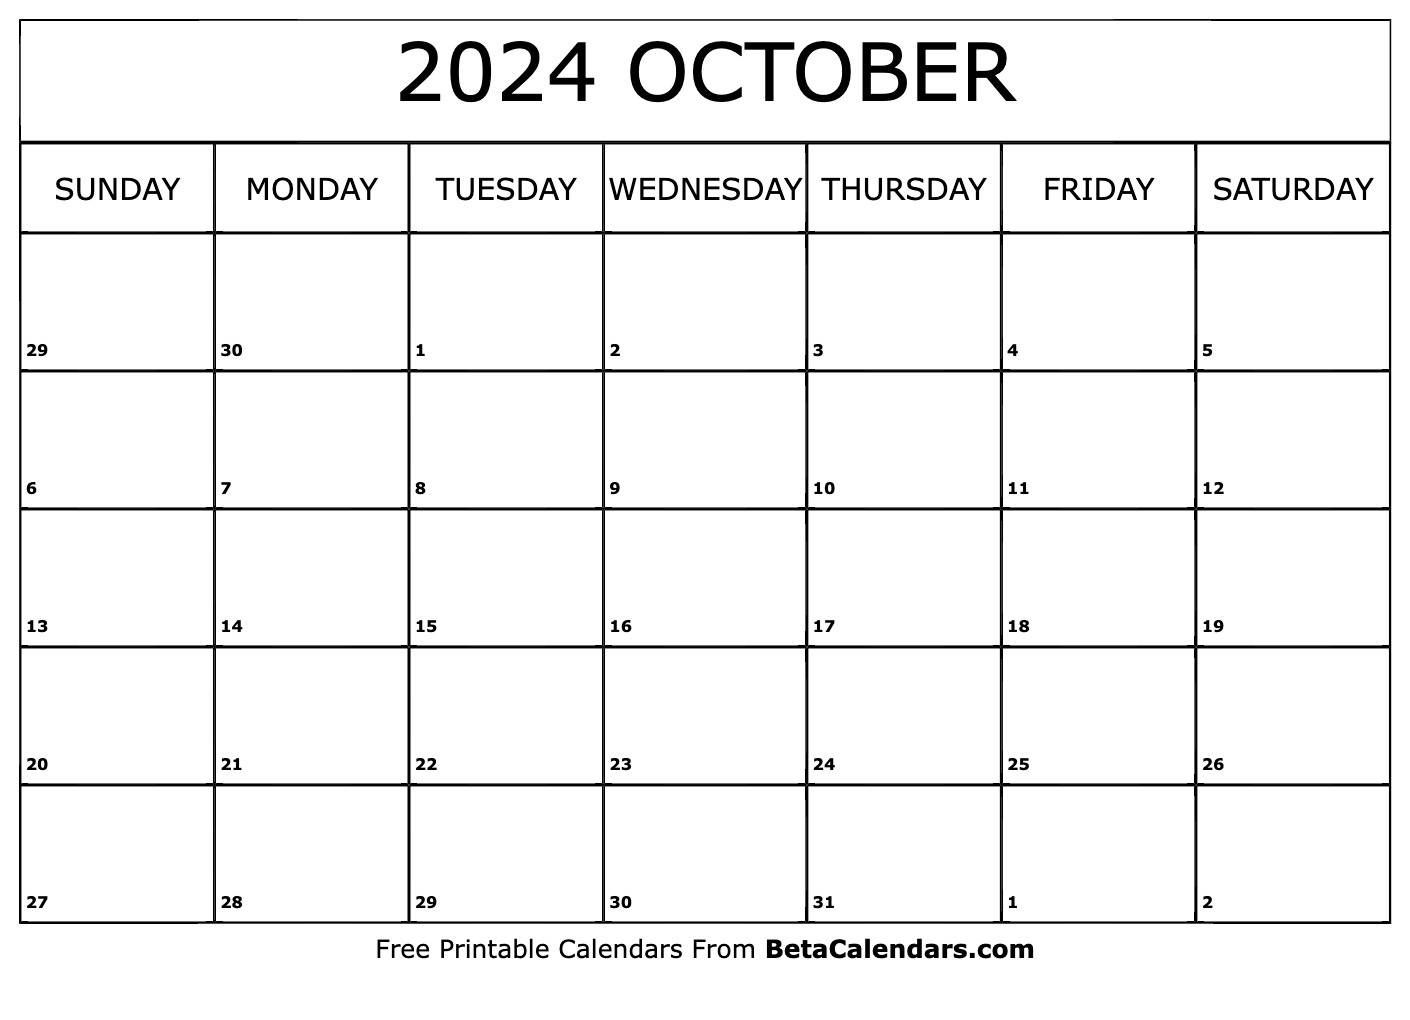 Free Printable October 2024 Calendar regarding Free Printable Calendar 2024 Wiki Calendar